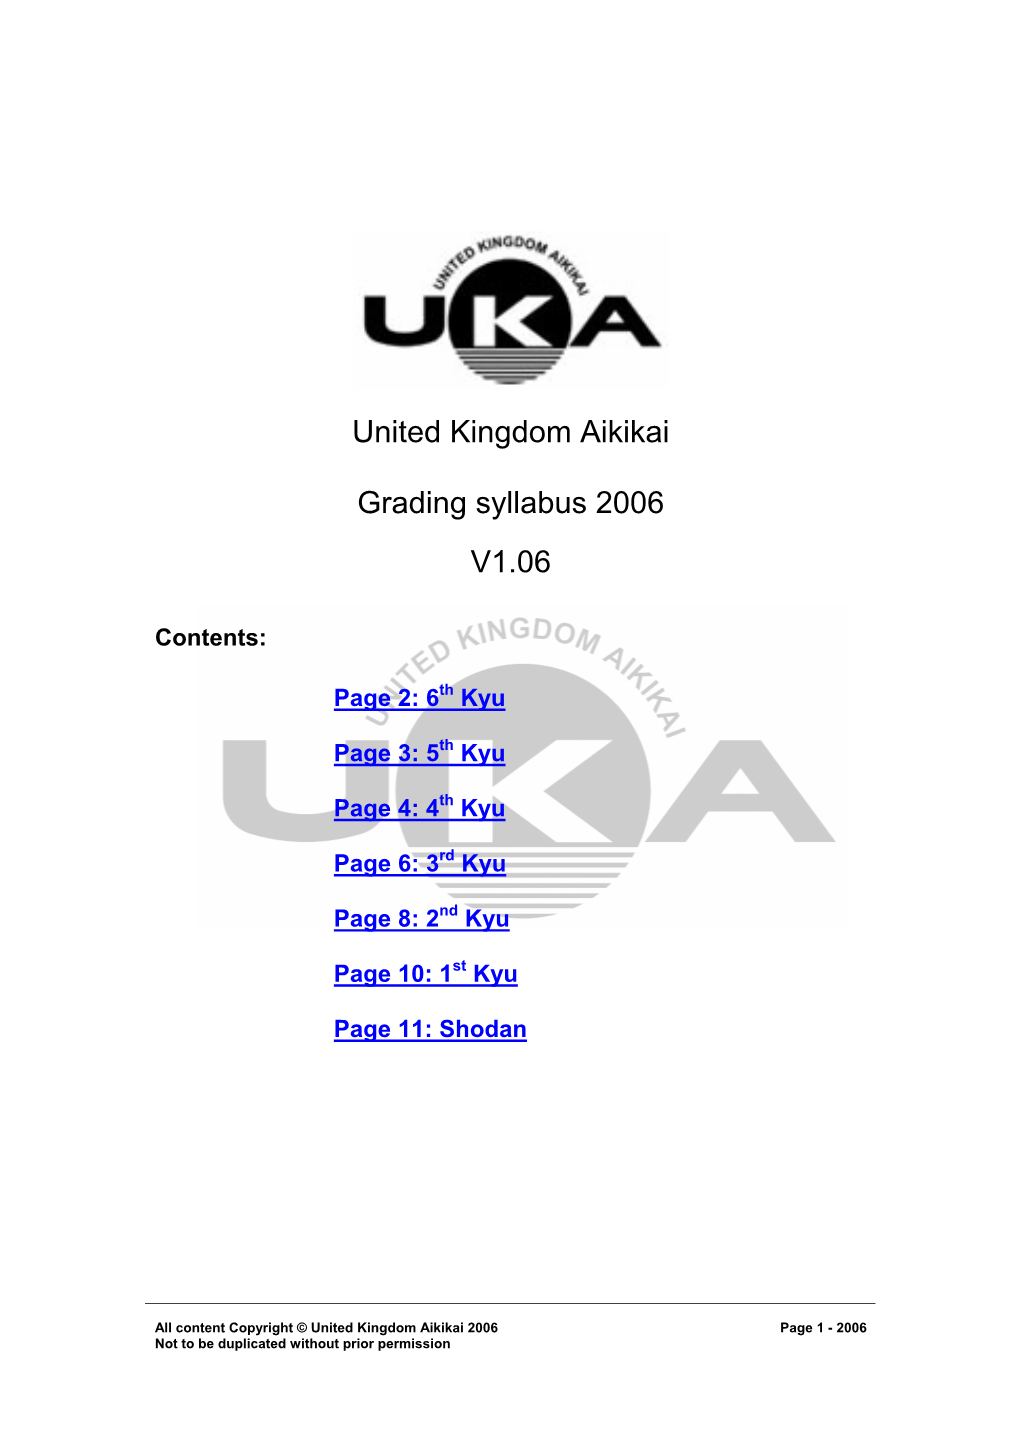 United Kingdom Aikikai Grading Syllabus 2006 V1.06